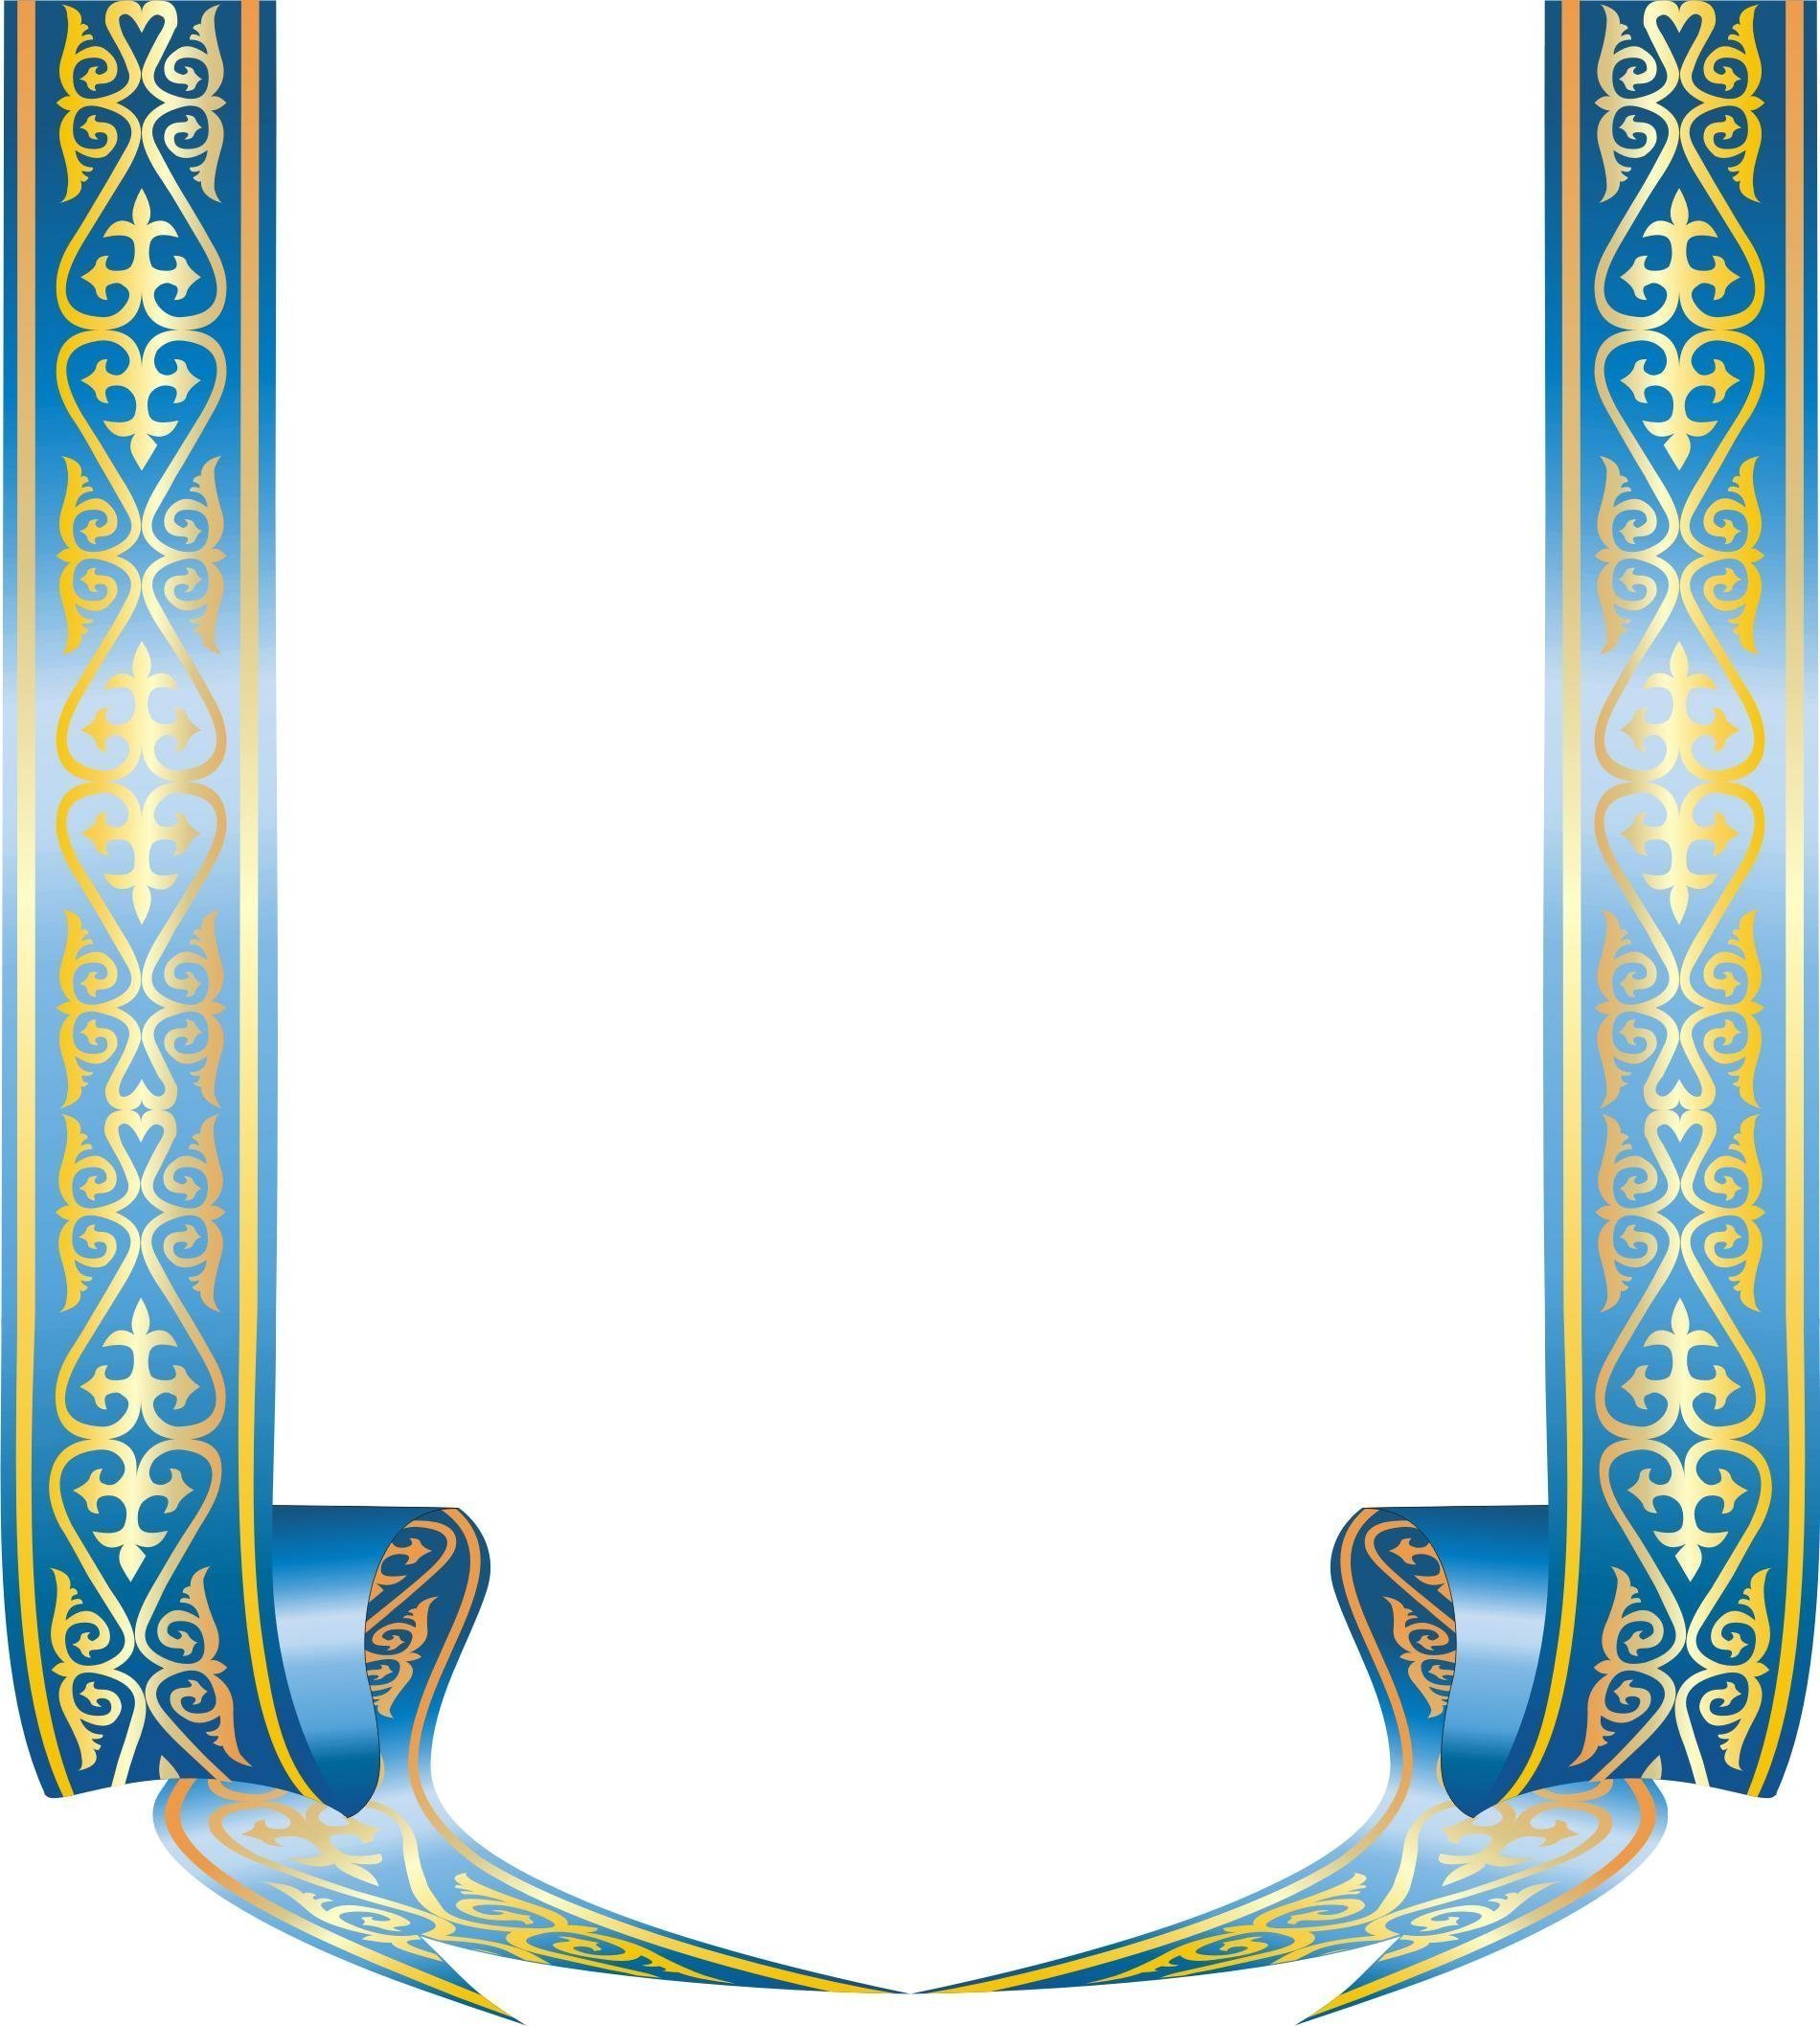 Рамка для грамоты с казахским орнаментом